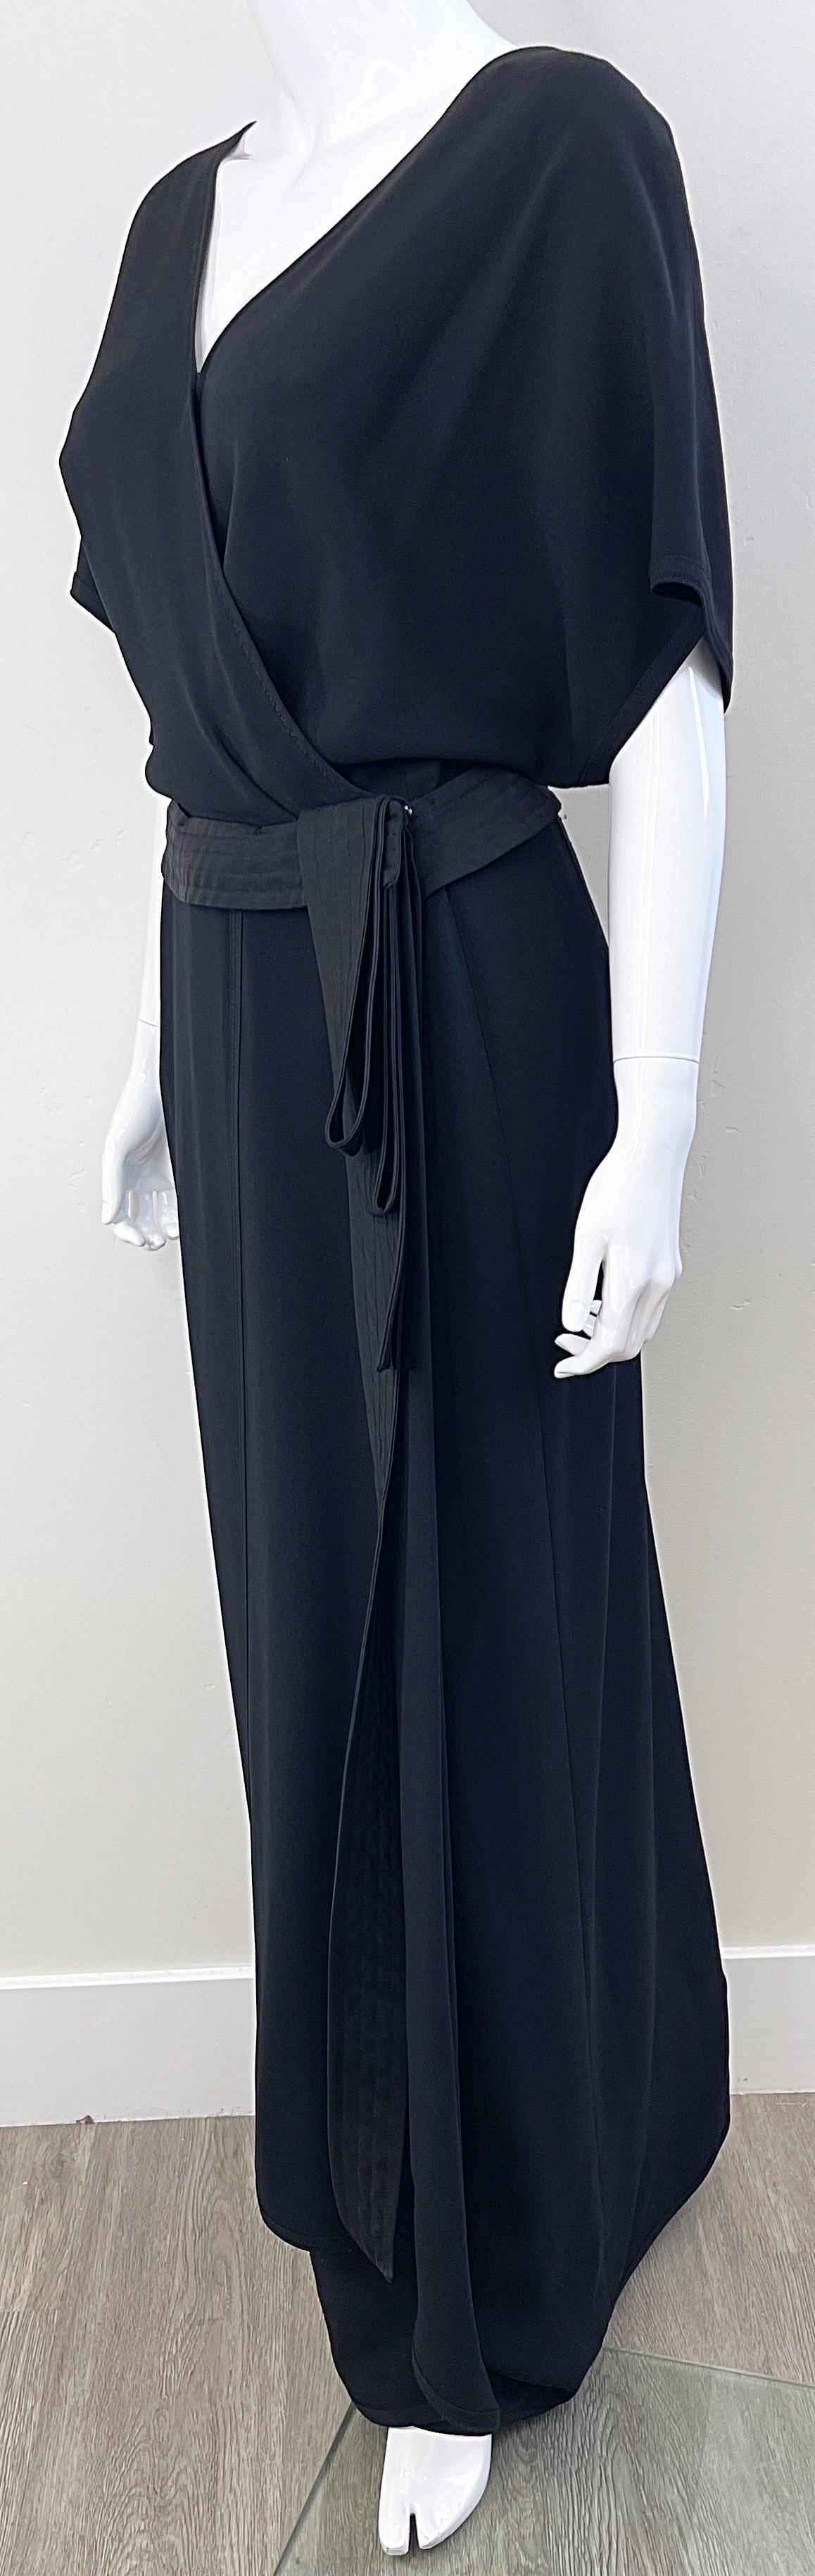 NWT Gianfranco Ferre 2000s Size 44 / 8 - 10 Black Dolman Sleeve Gown Maxi Dress For Sale 4